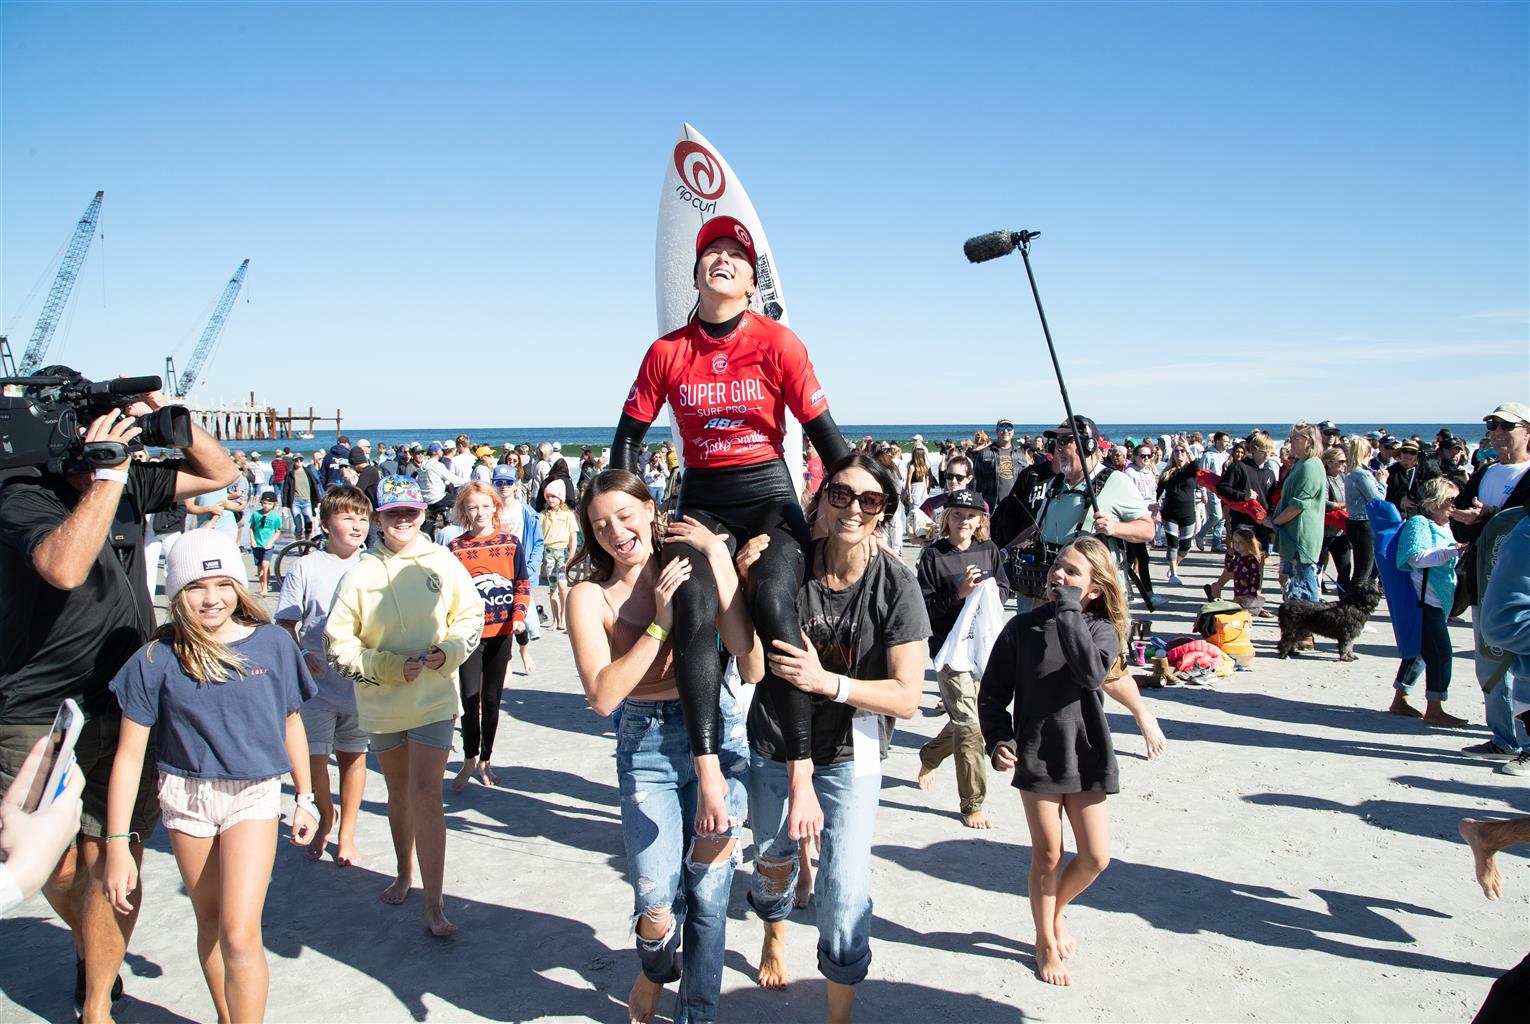 San Diego's Alyssa Spencer wins Super Girl Surf Pro